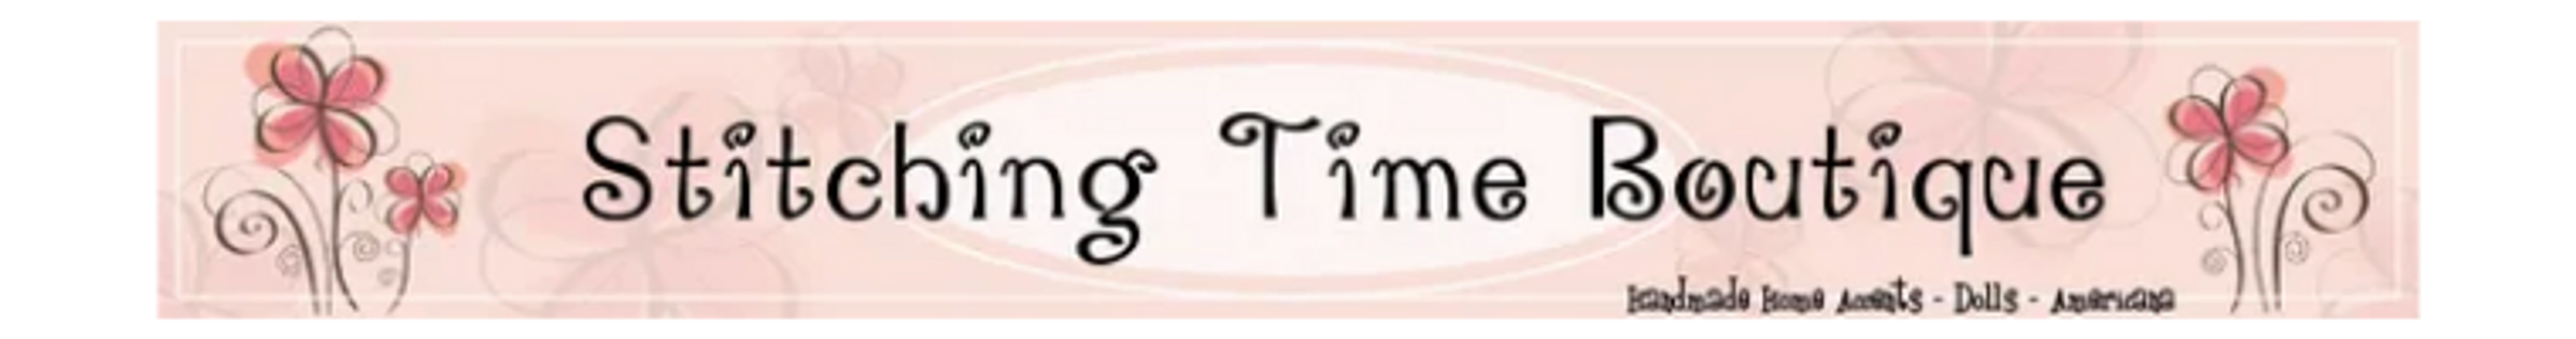 Stitching Time Boutique logo